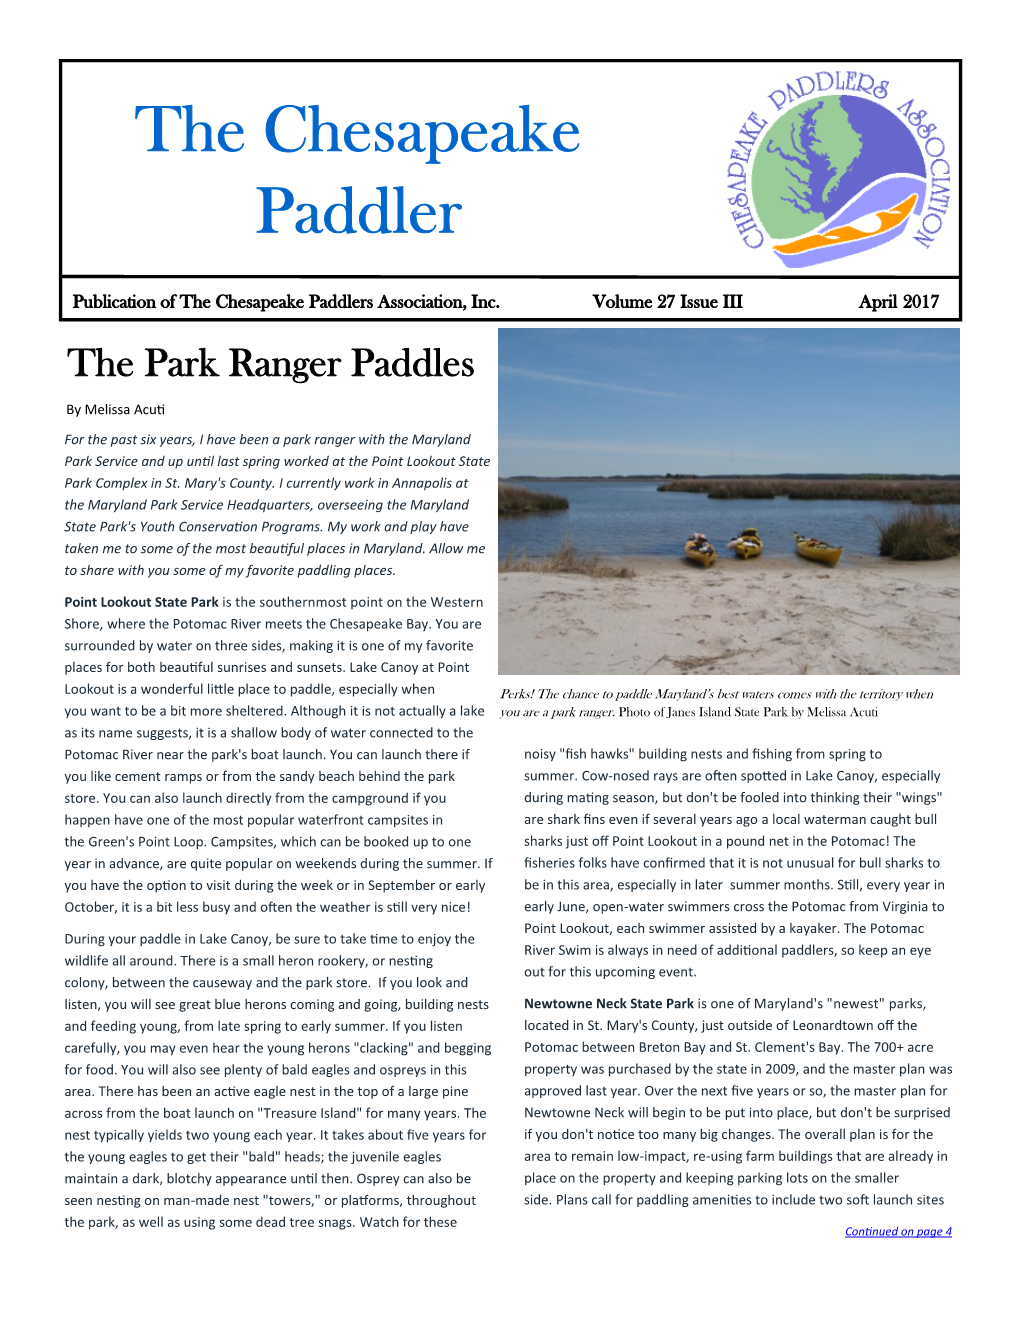 The Chesapeake Paddler April 2017 the Chesapeake Paddler